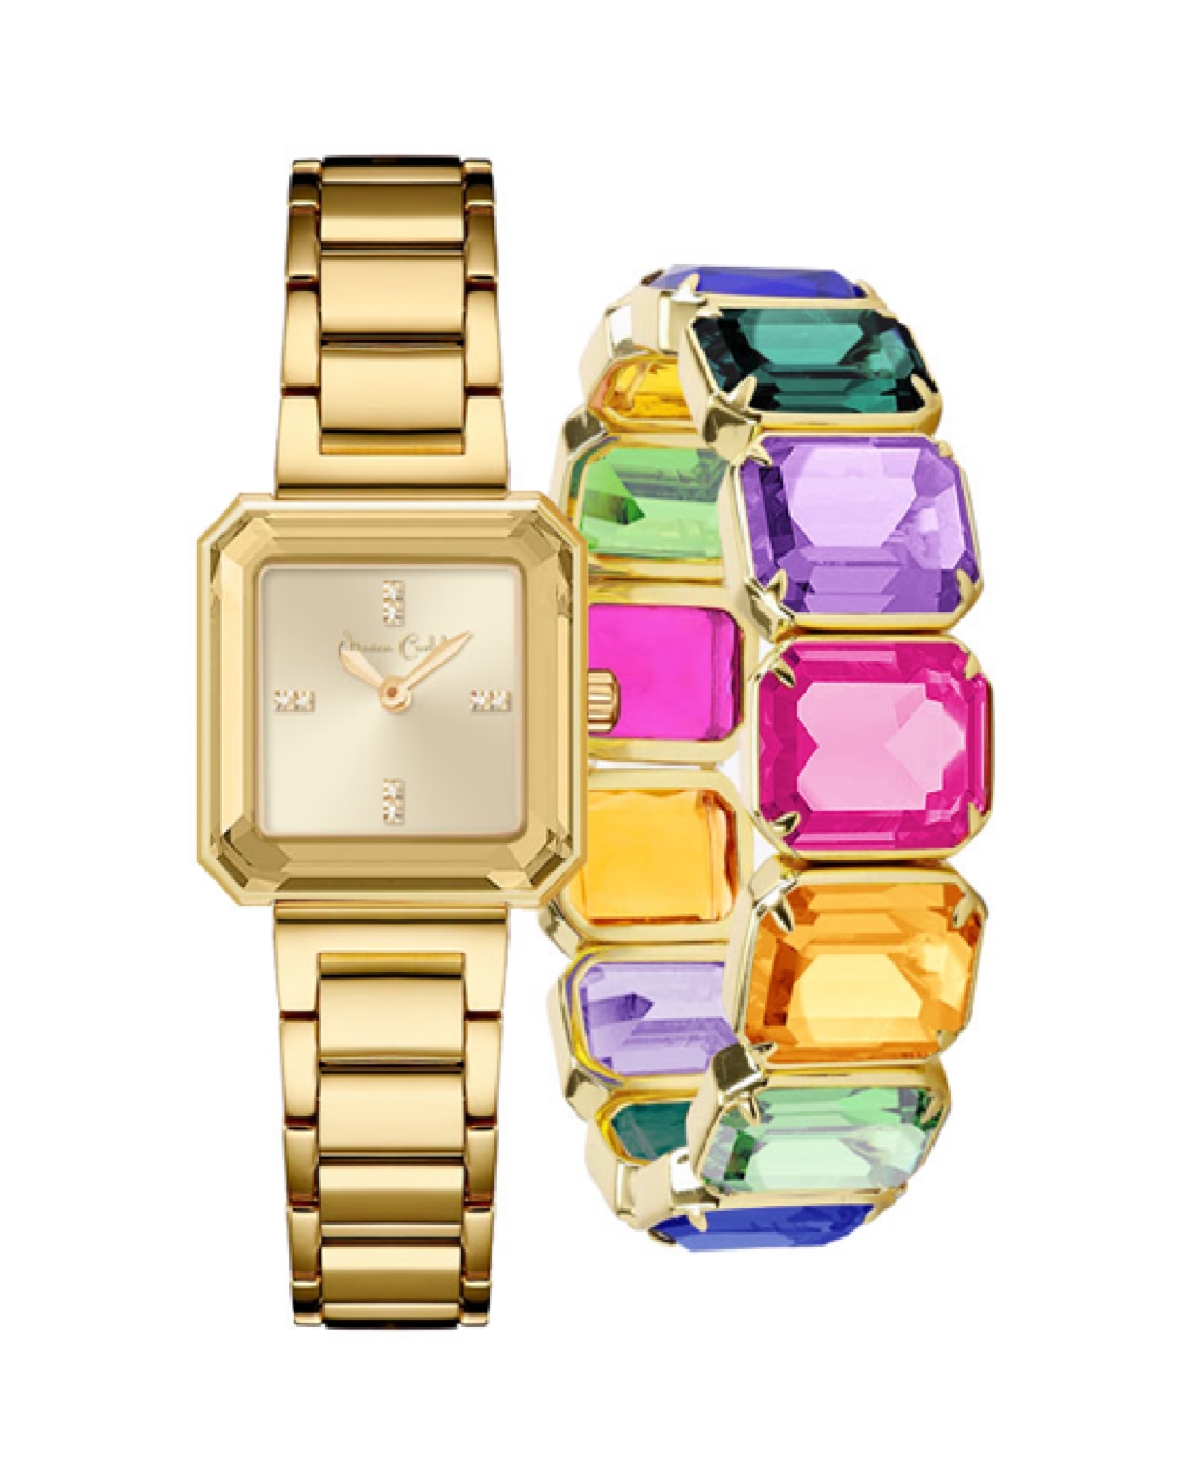 Women's Quartz Gold-Tone Alloy Watch 26mm Gift Set - Shiny Gold, Light Champagne Sunray